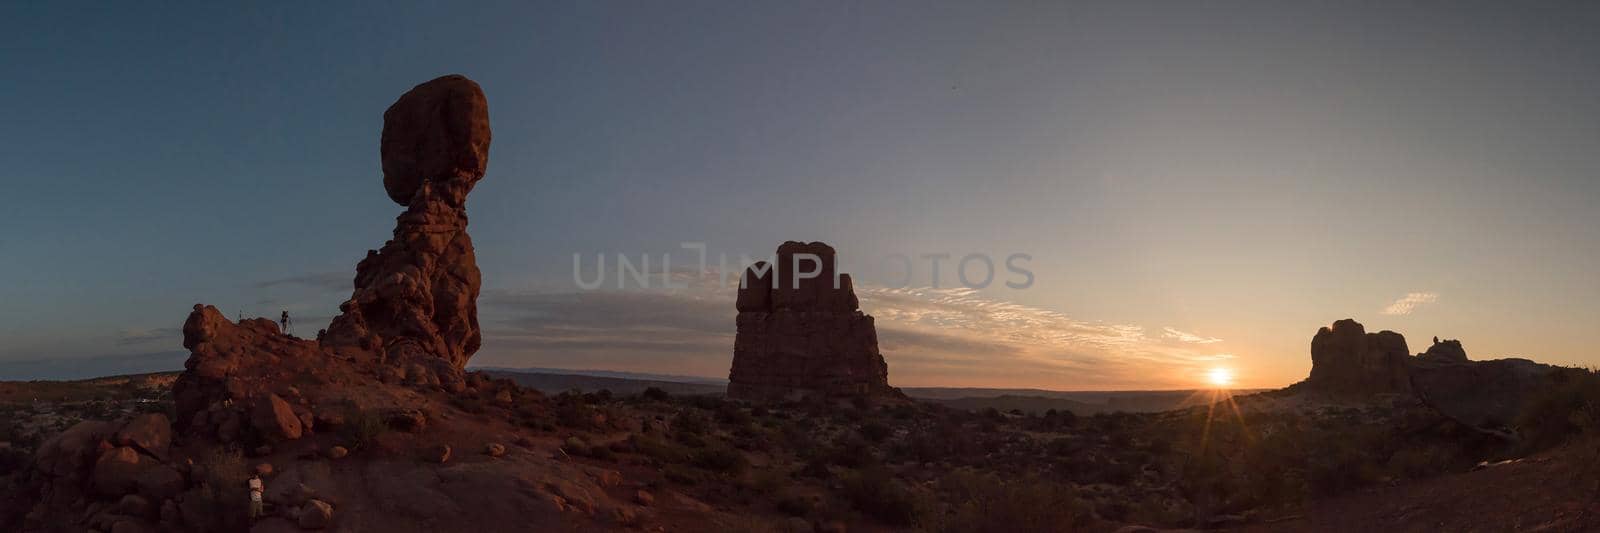 Utah Panorama of balanced rock and mesa rock at sunset by jyurinko